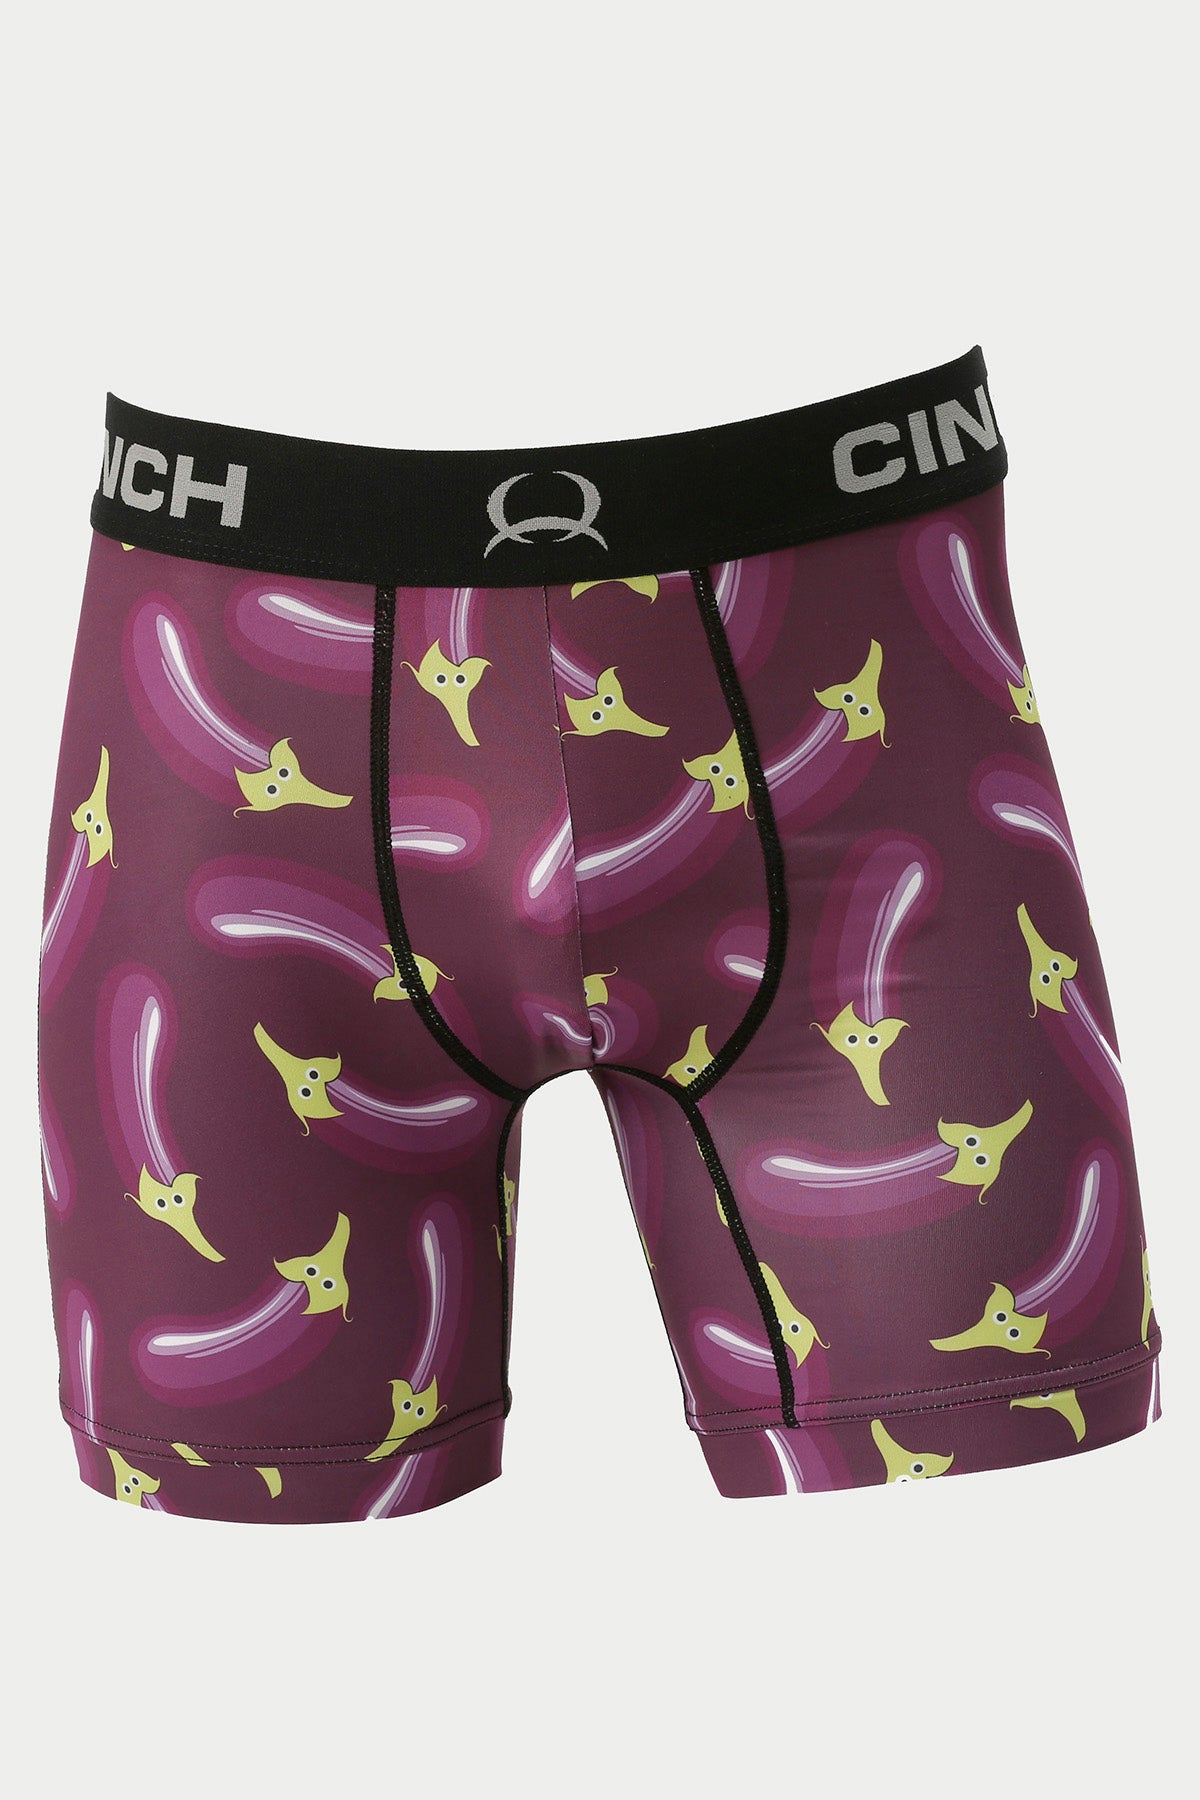 Cinch Eggplant 🍆 Underwear